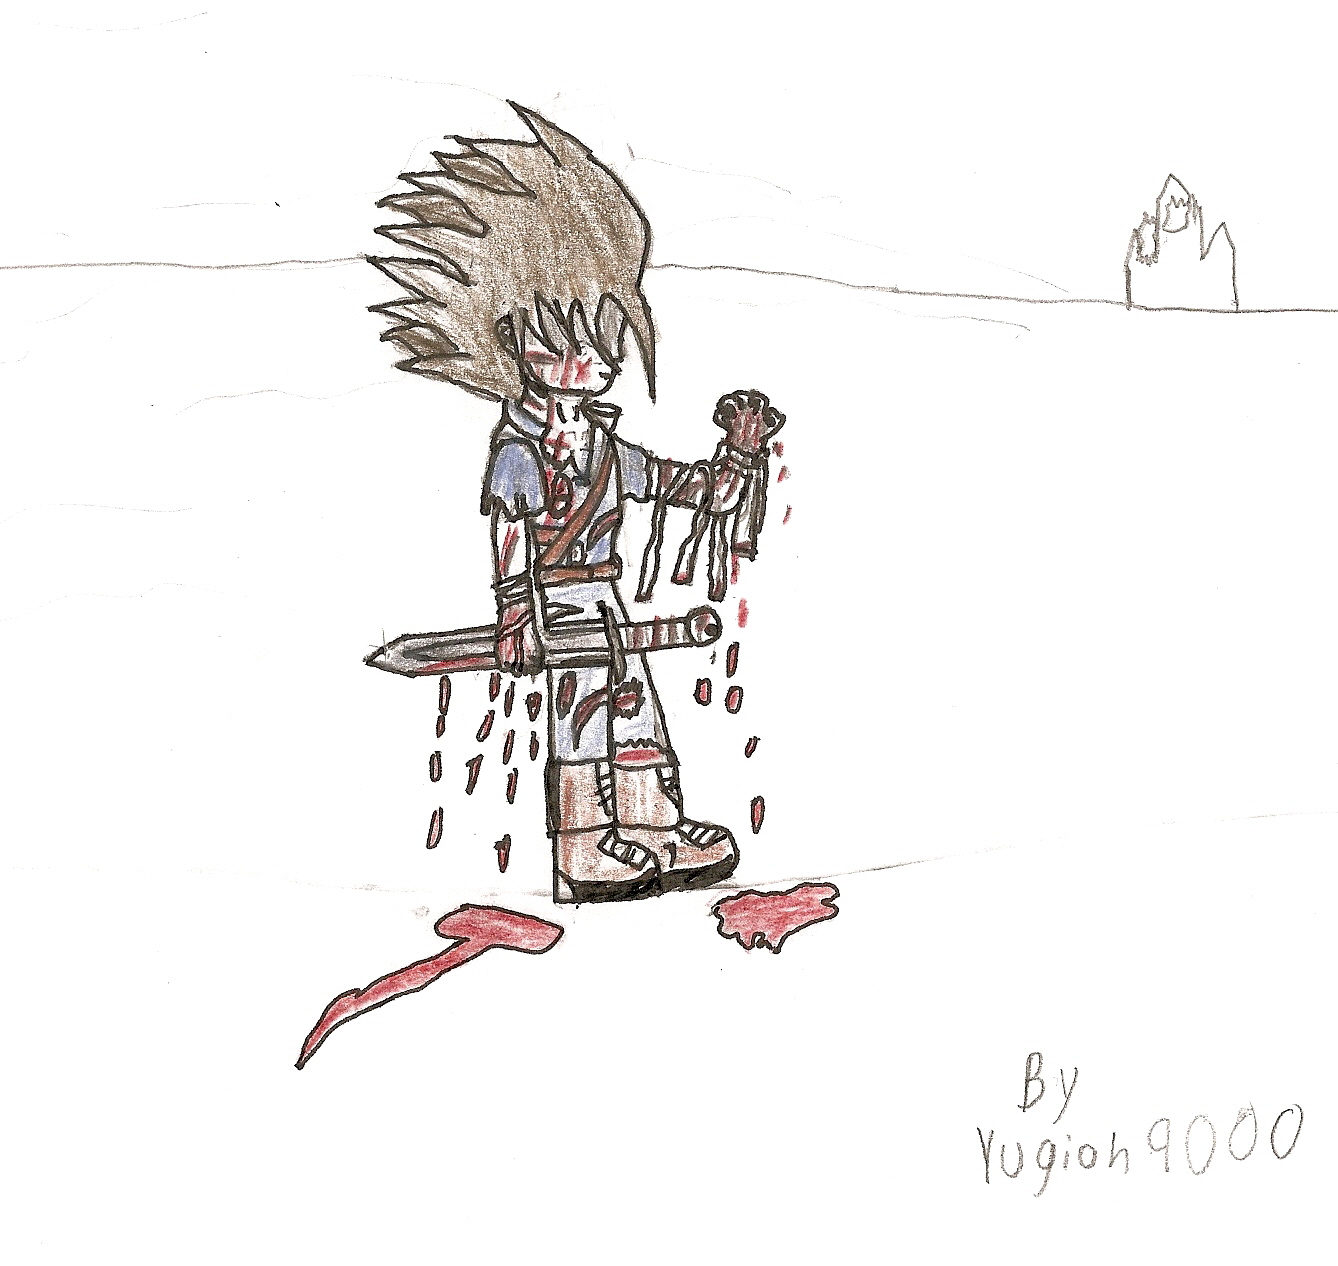 Random warrior by Yugioh9000